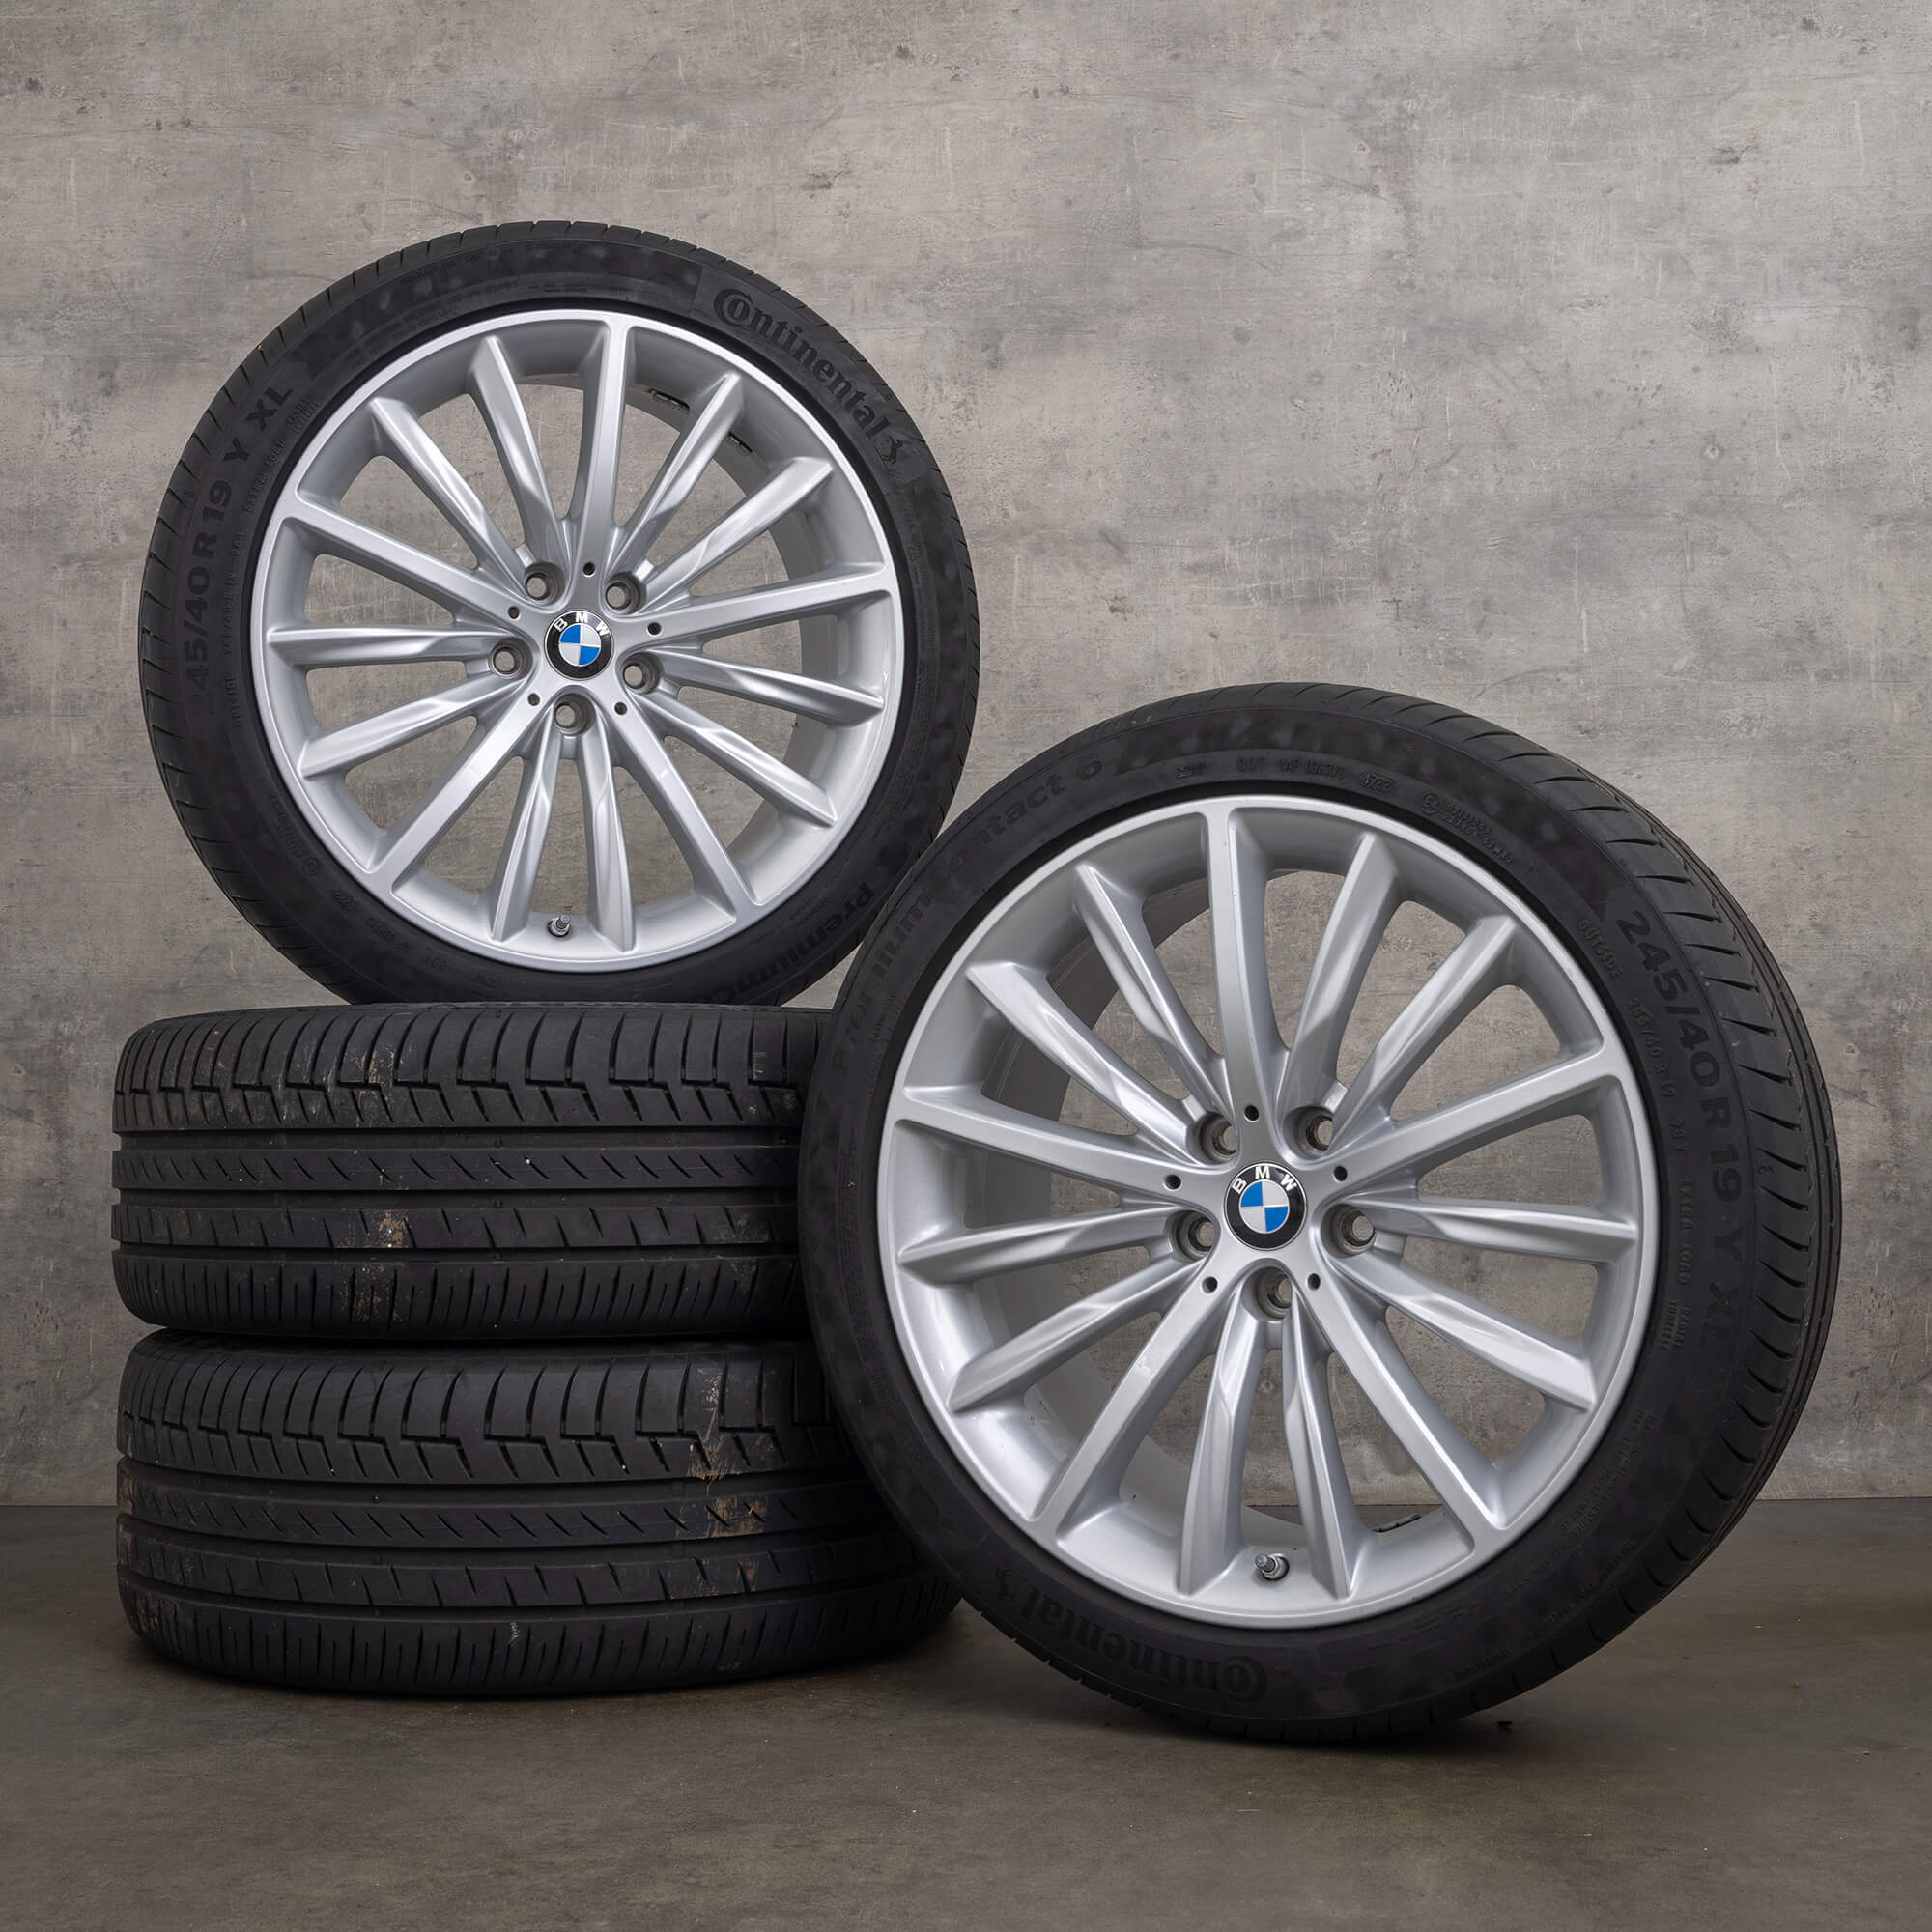 OEM BMW 5 Series G30 G31 19 inch rims summer tires Styling 633 6863419 silver wheels